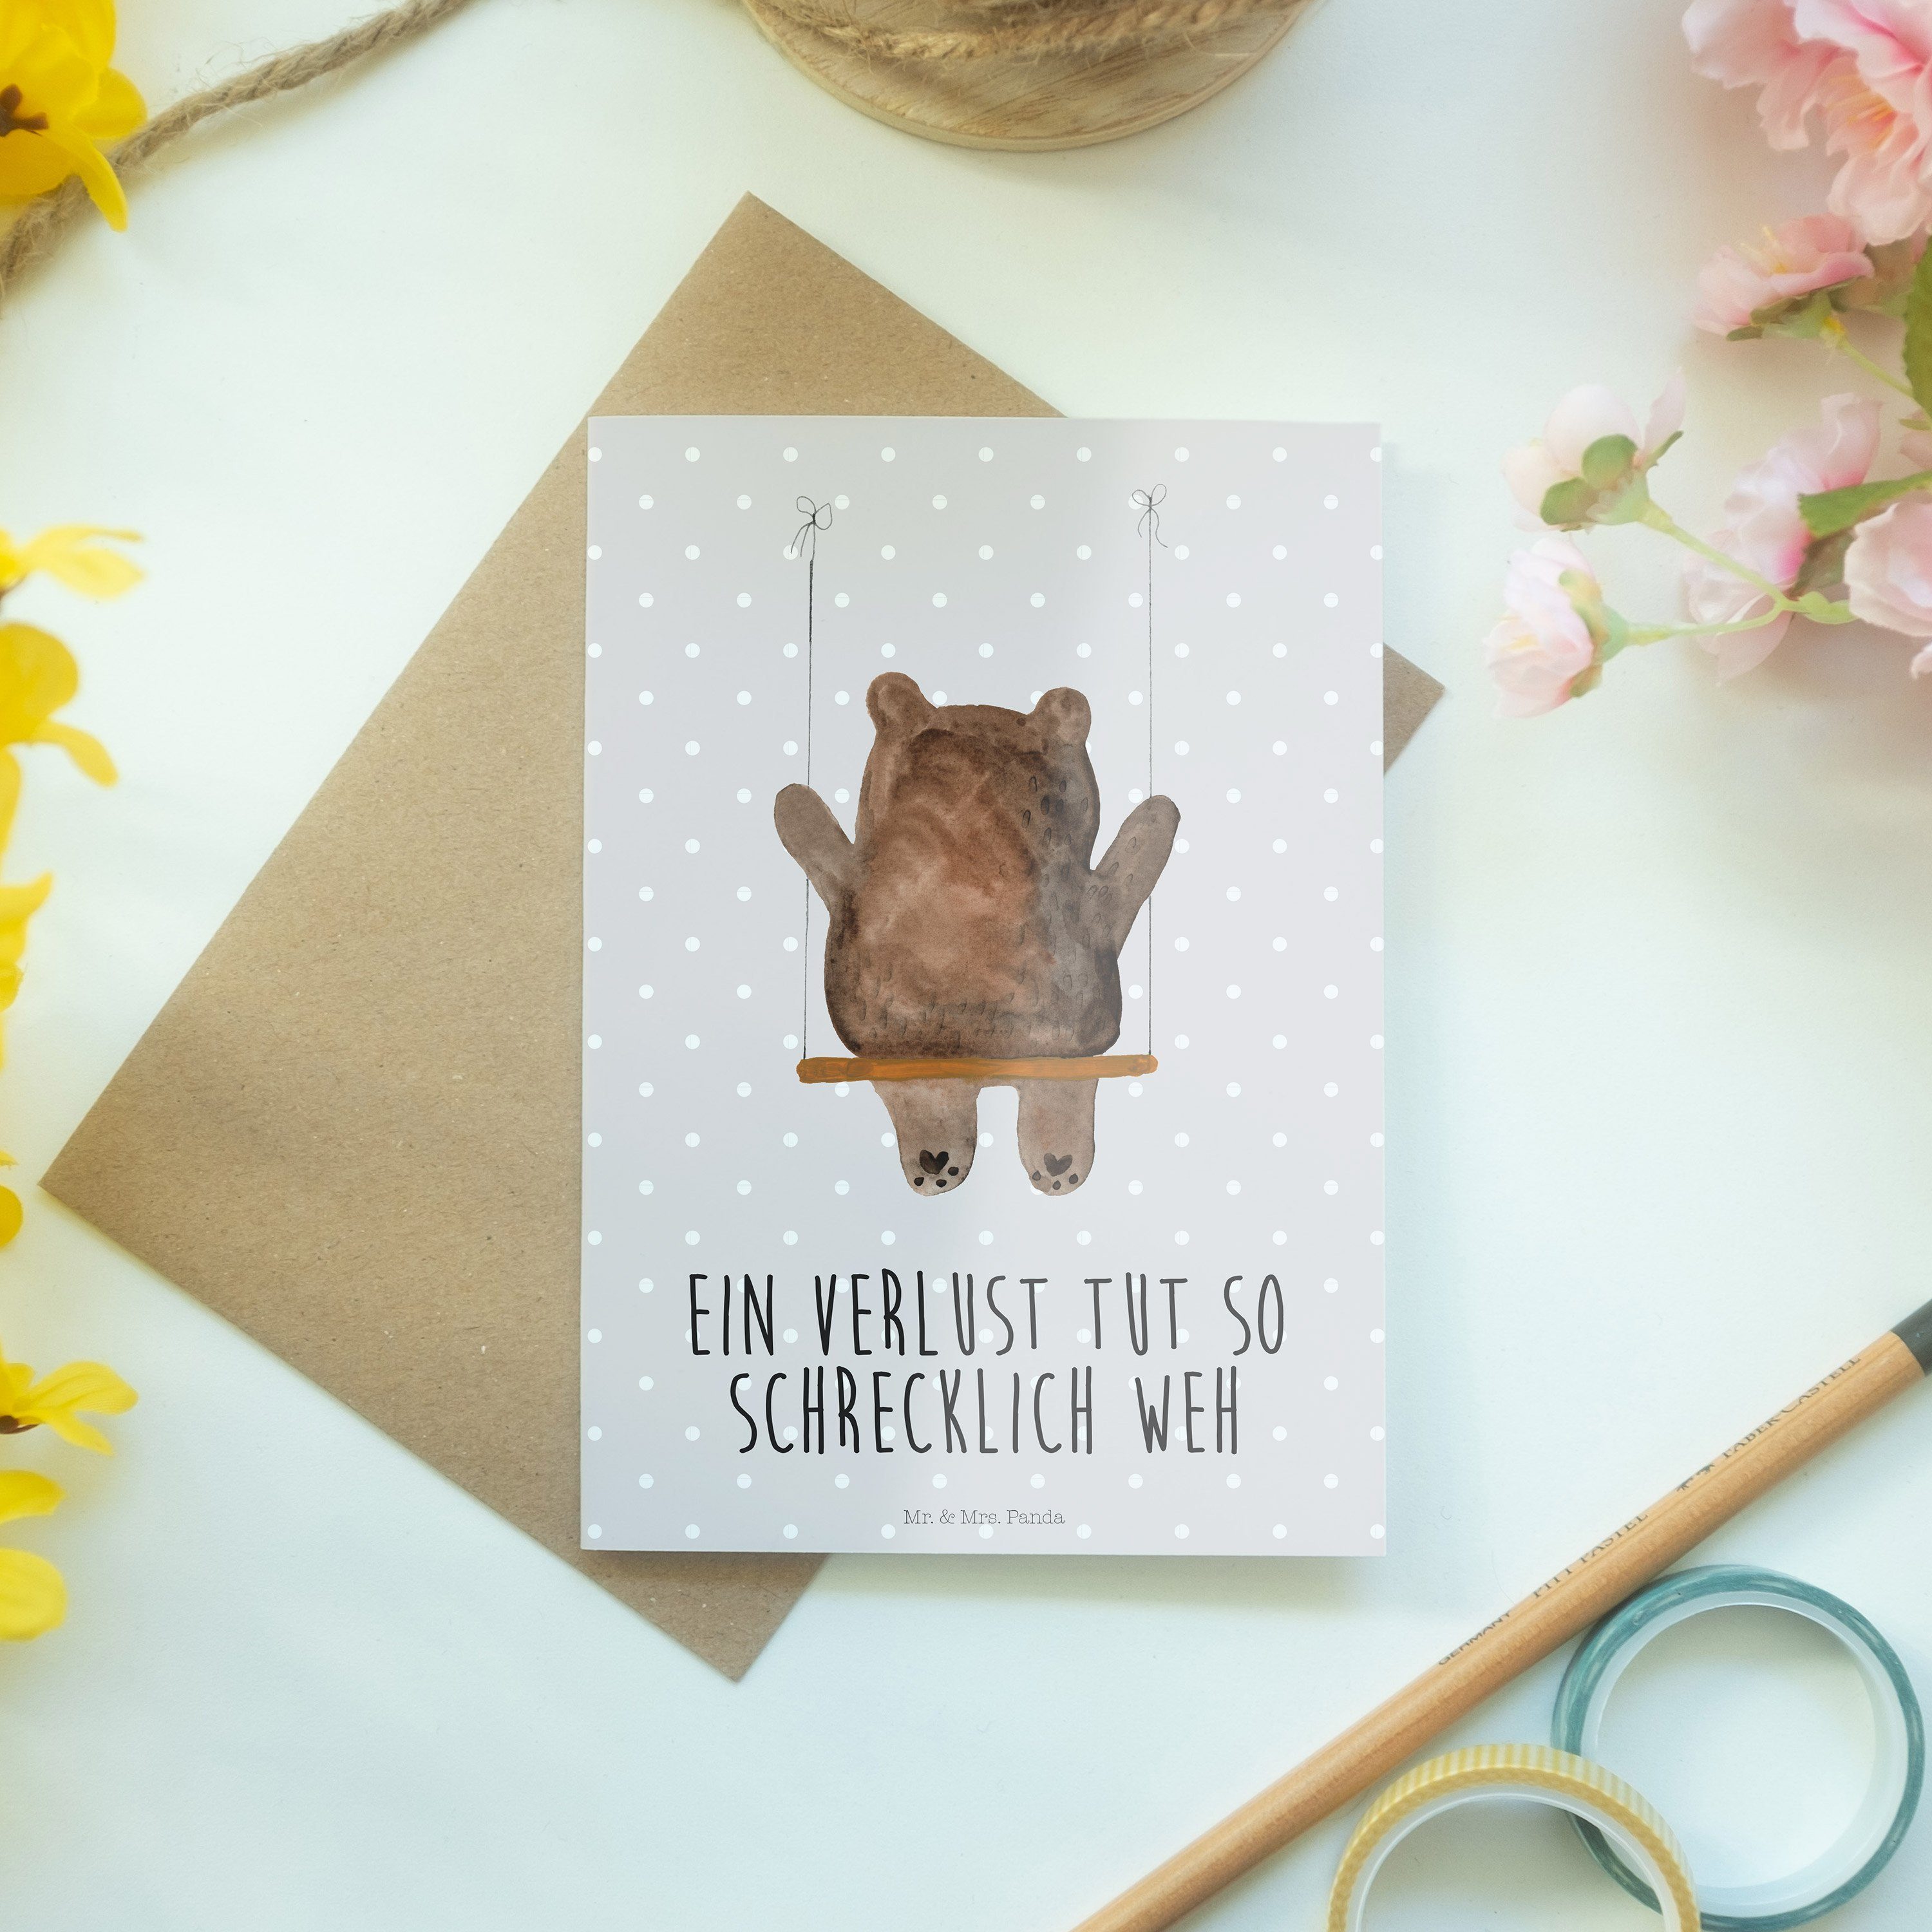 Mr. & Mrs. Panda - Bär - Grußkarte Geschenk, Grau Schaukel Glückwunsc Karte, Pastell Klappkarte